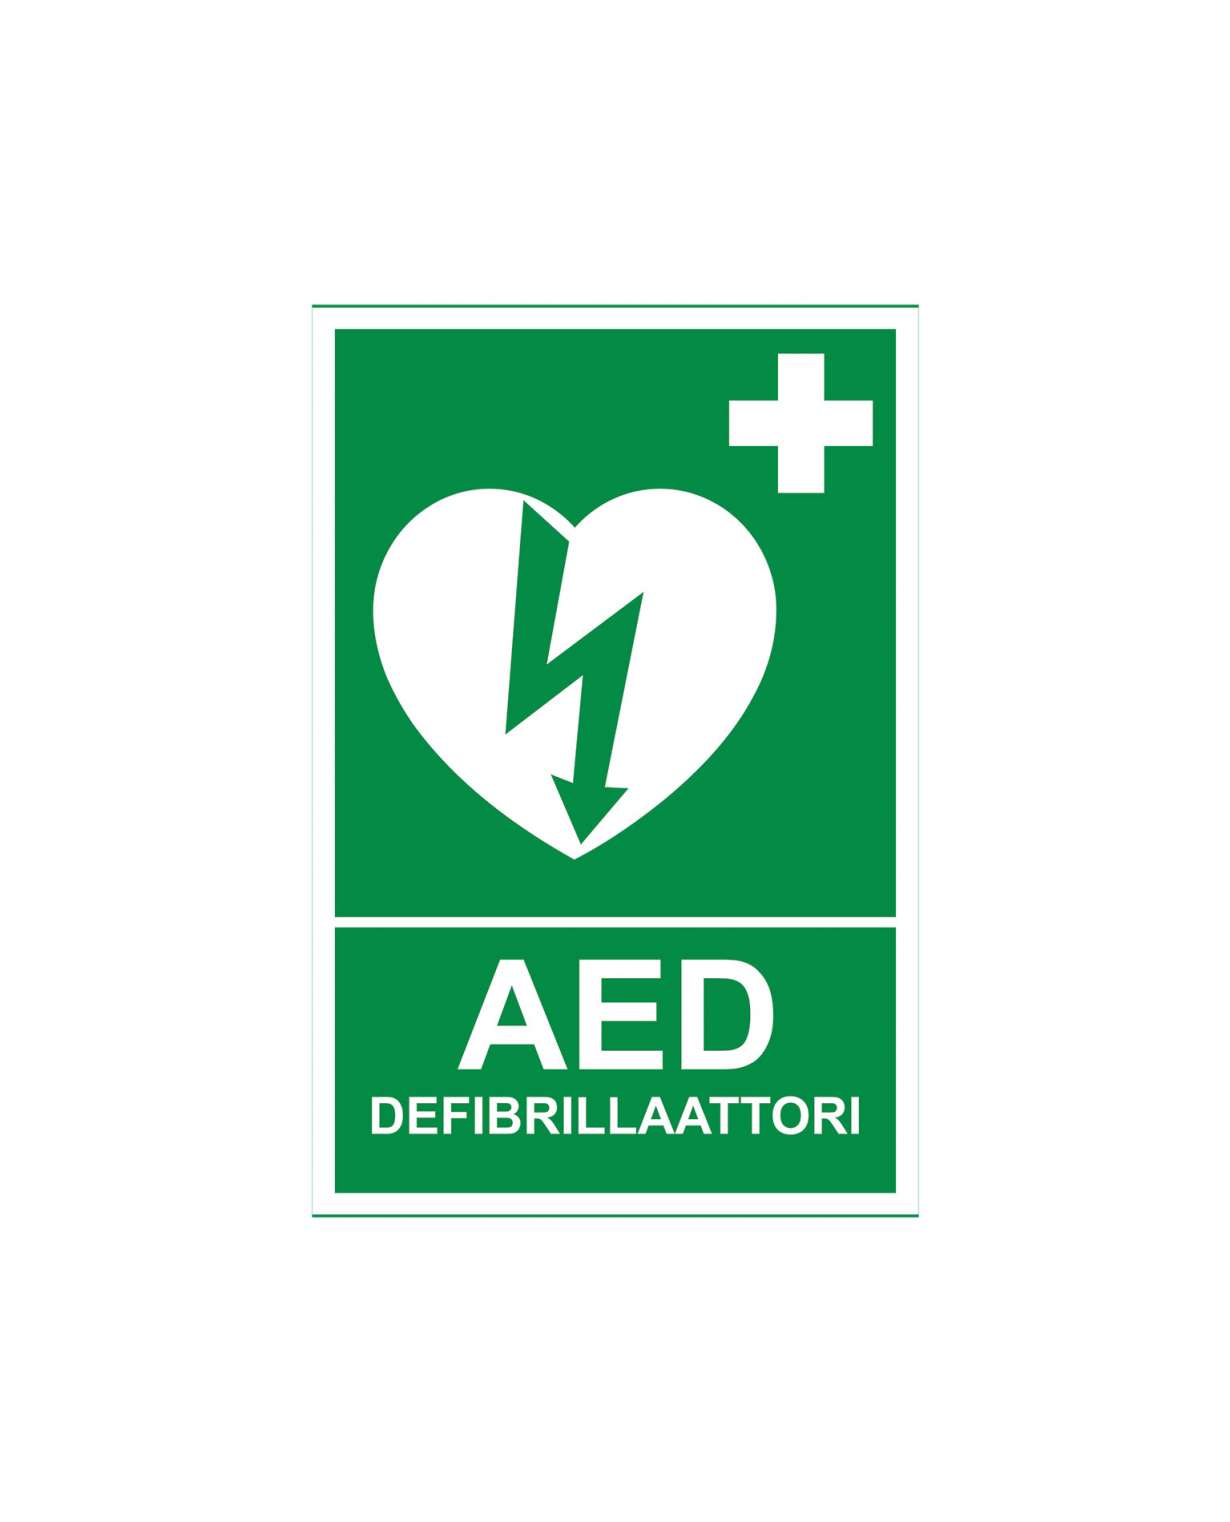 AED defibrillaattori, Tarra jälkiheijastava, 200x300 mm